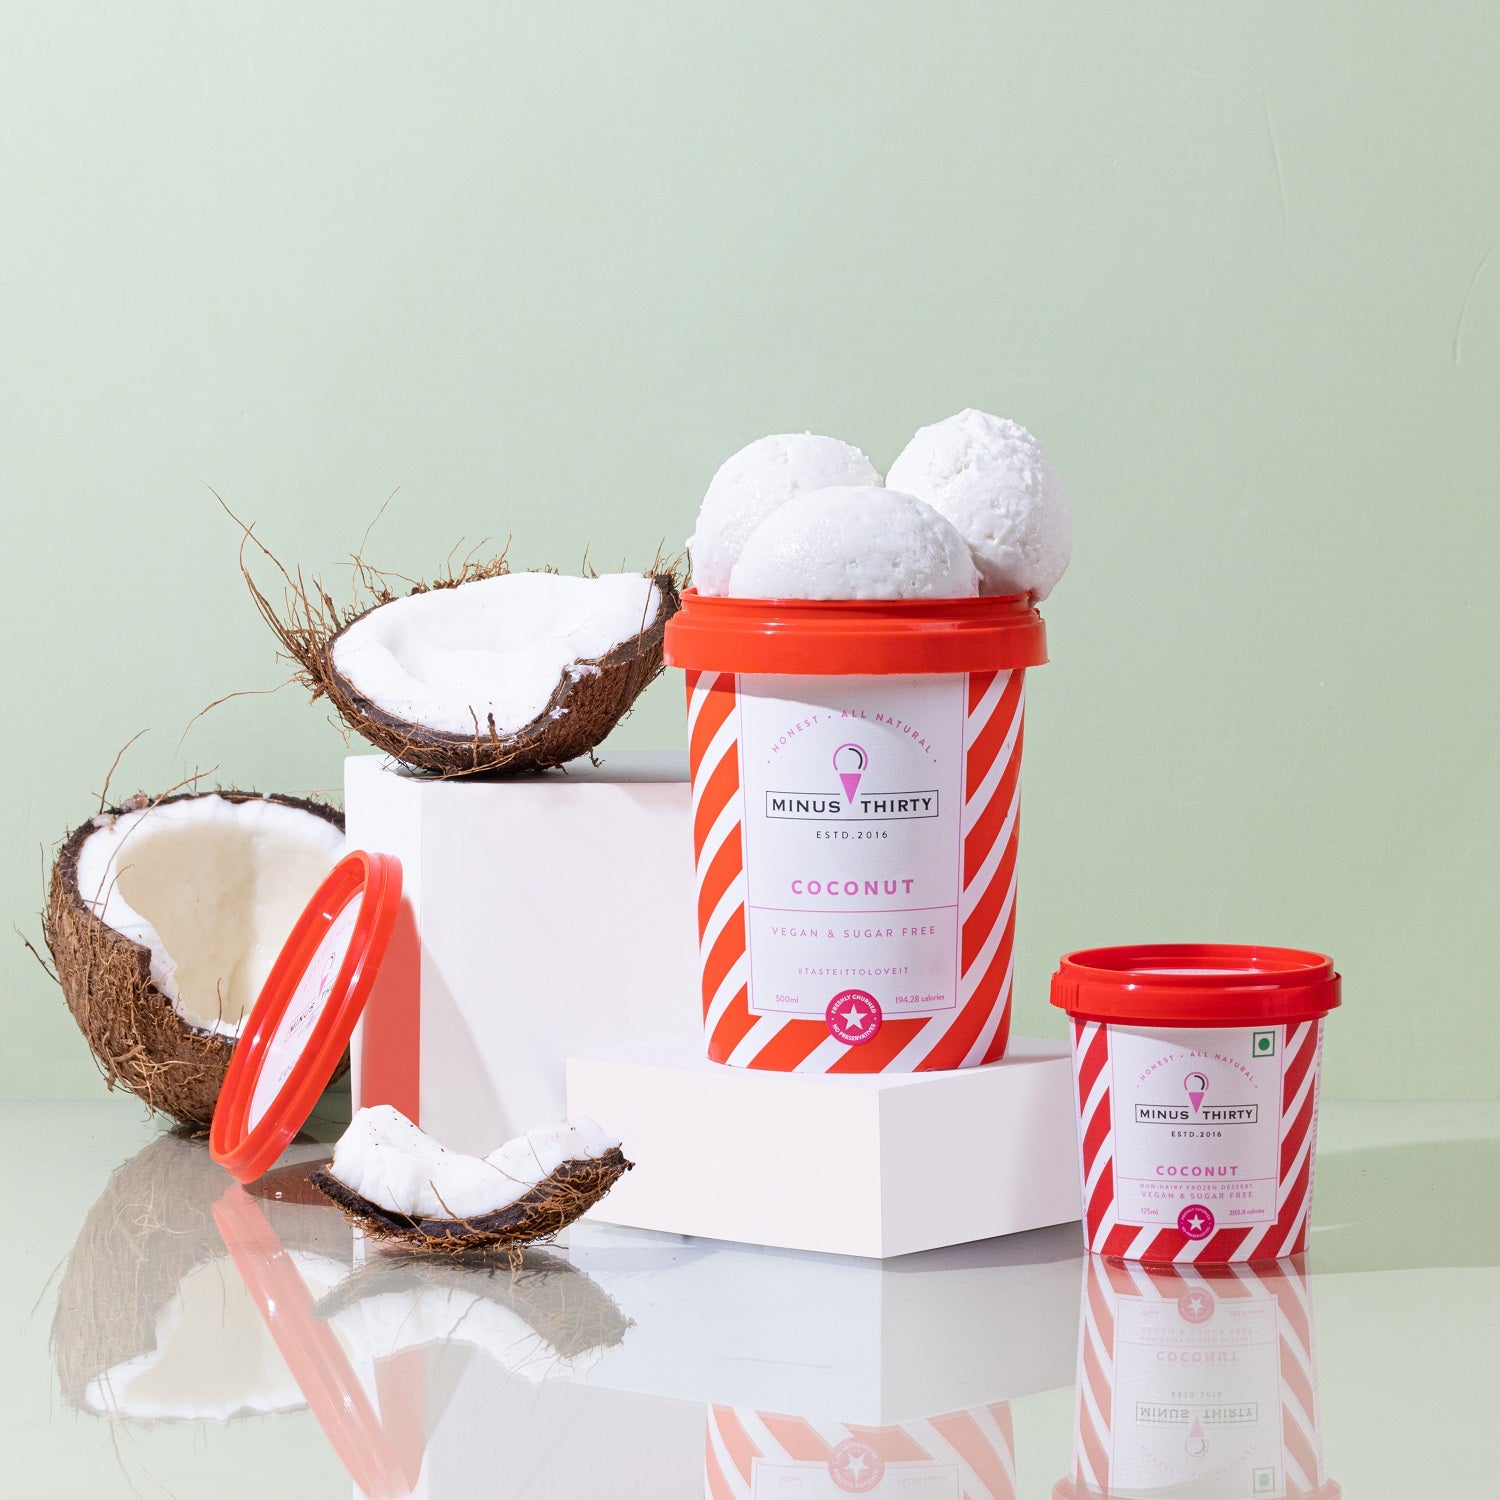 Coconut (Vegan & Sugar Free)